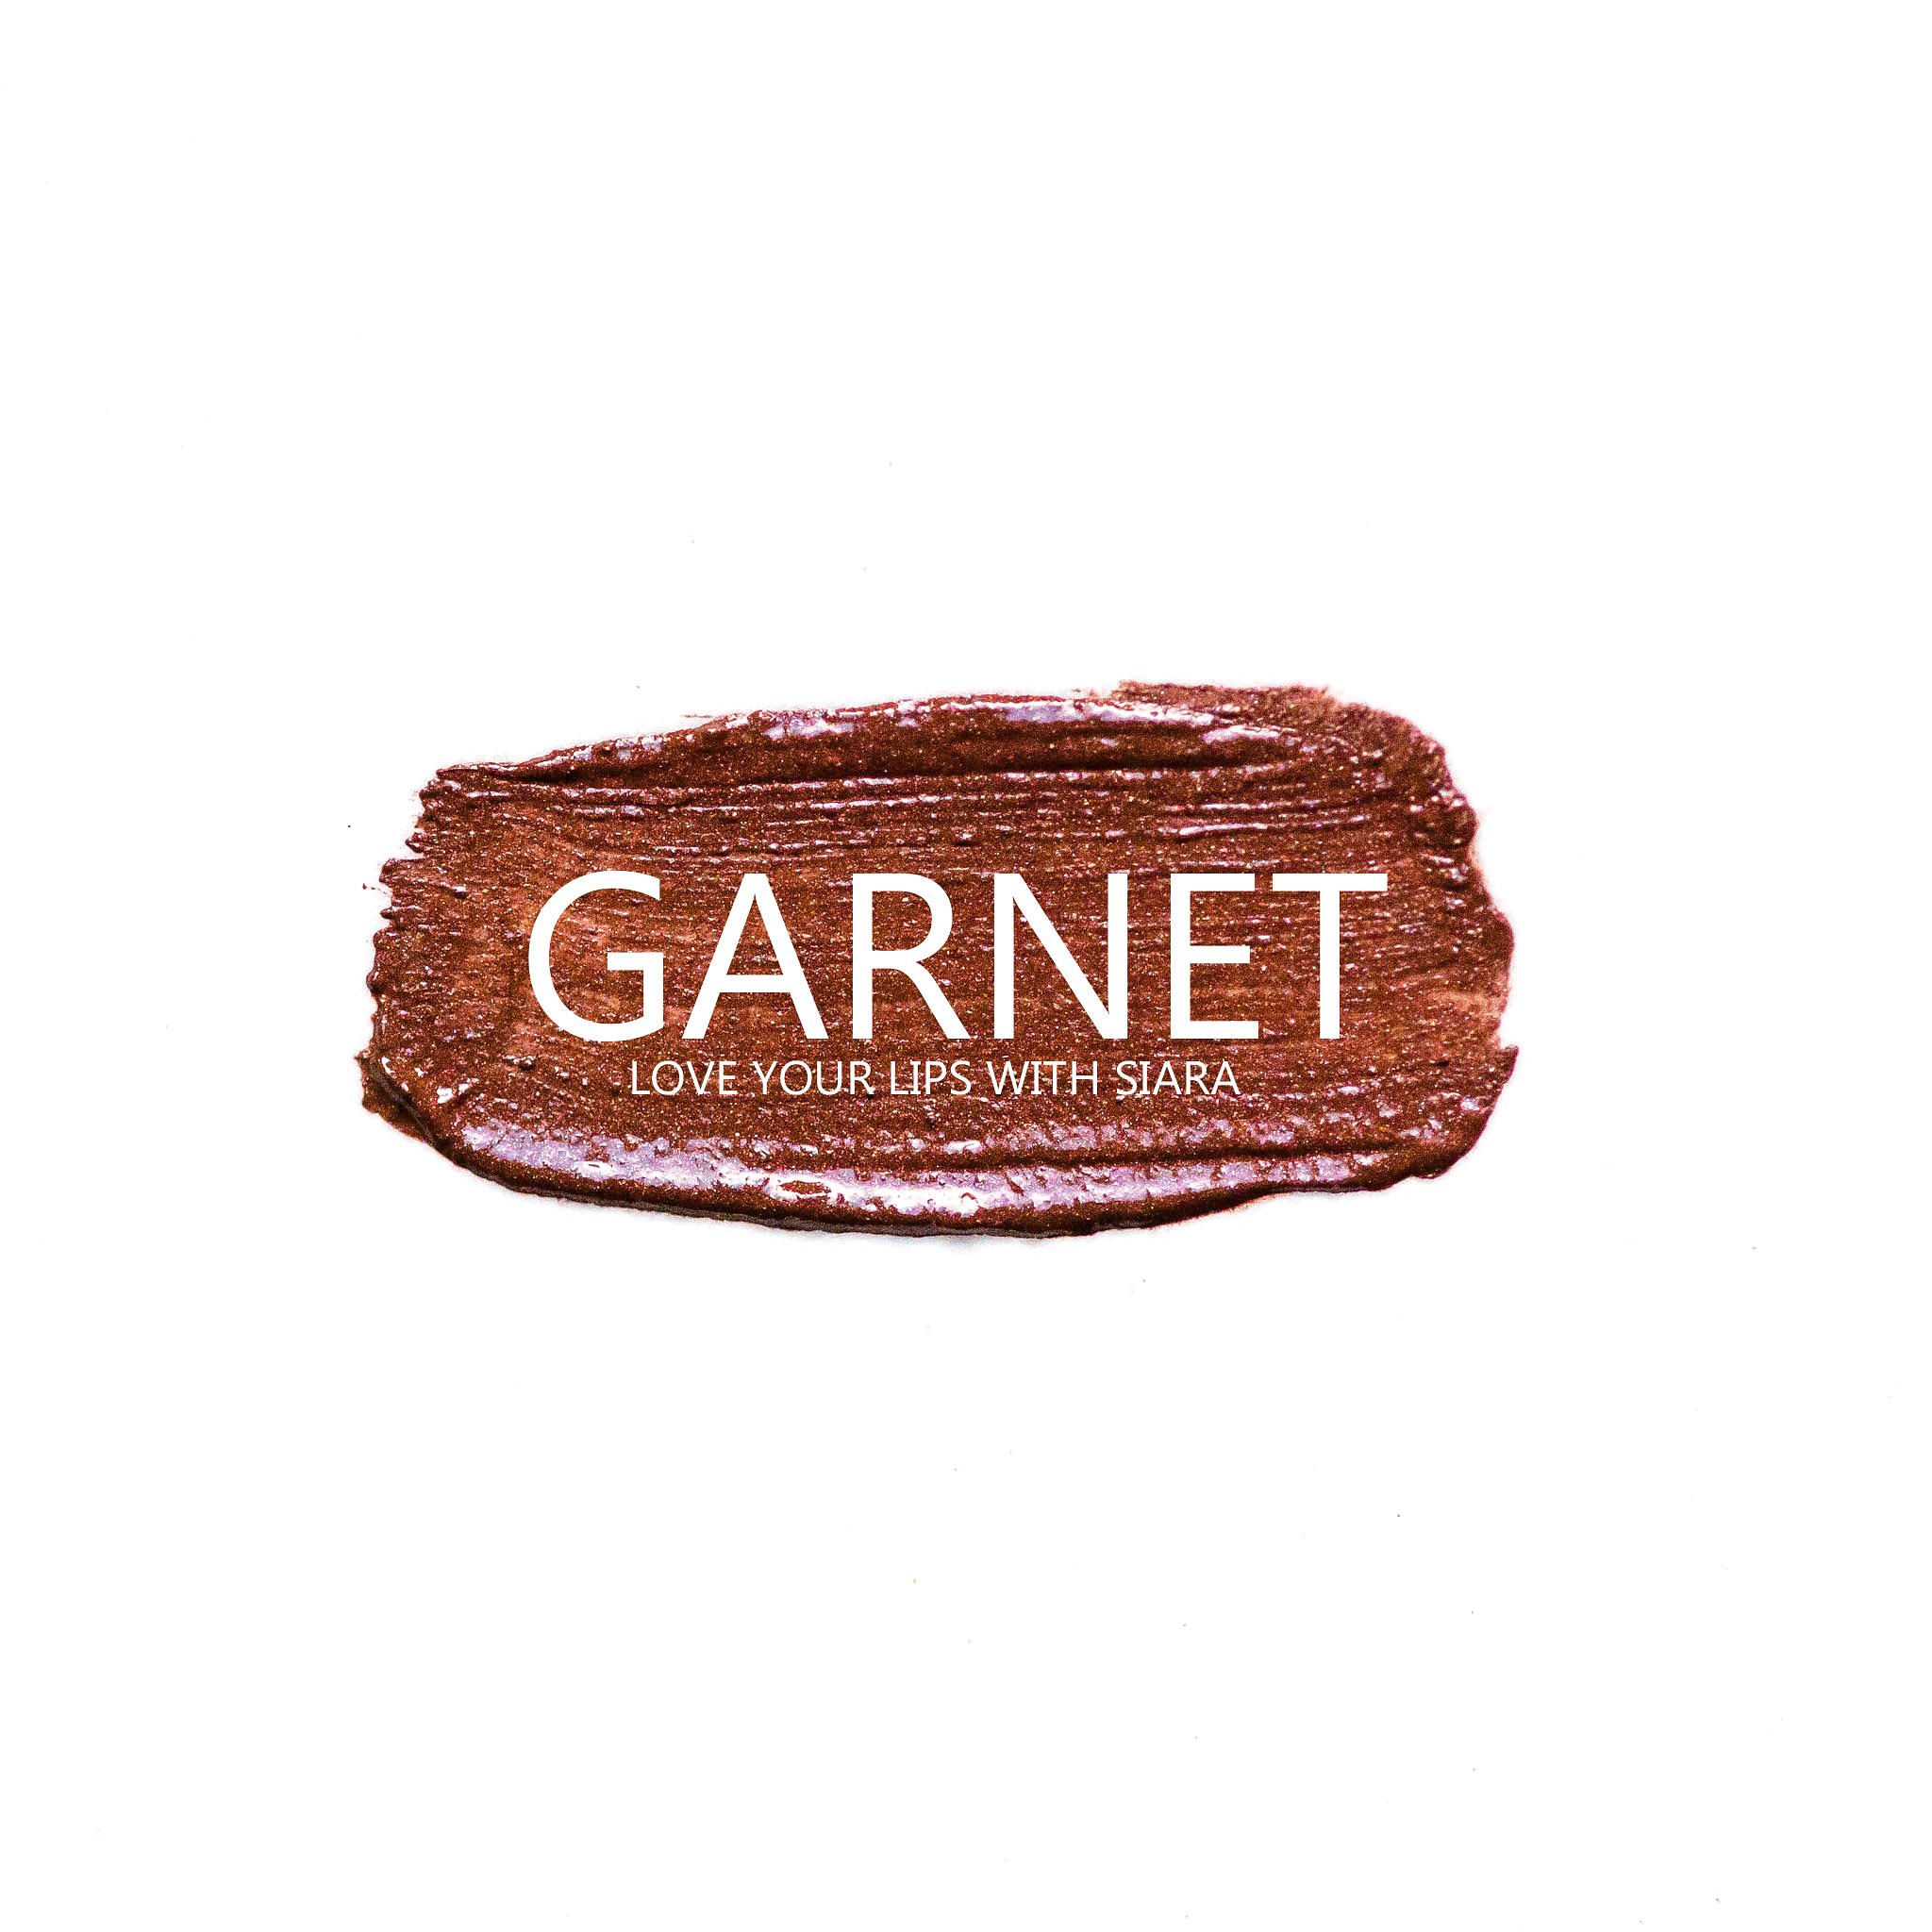 Garnet ShadowSense